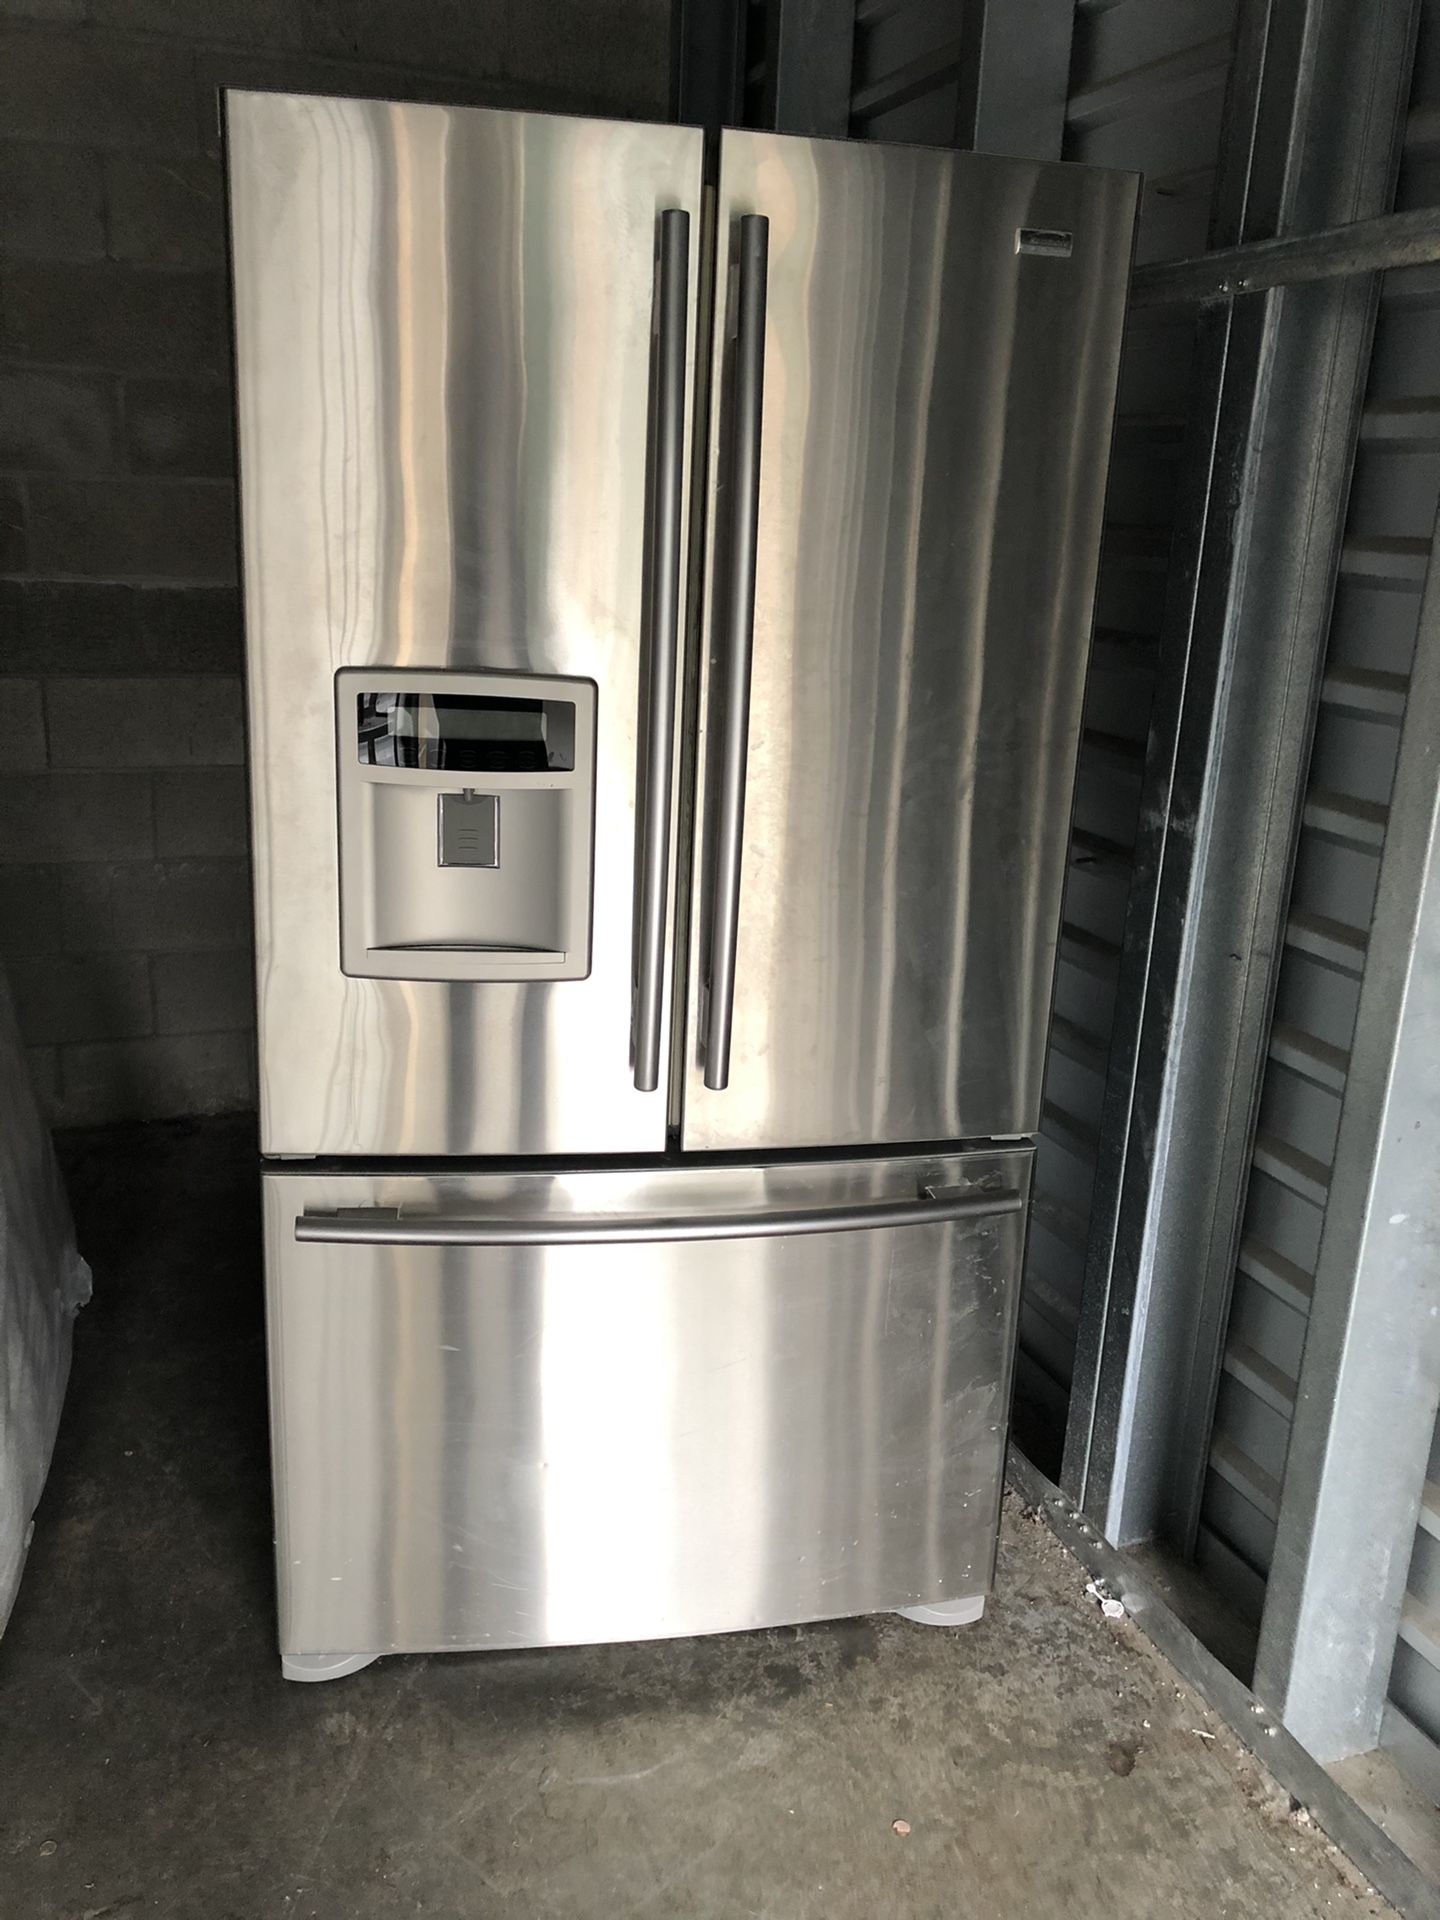 Kenmore stainless steel fridge